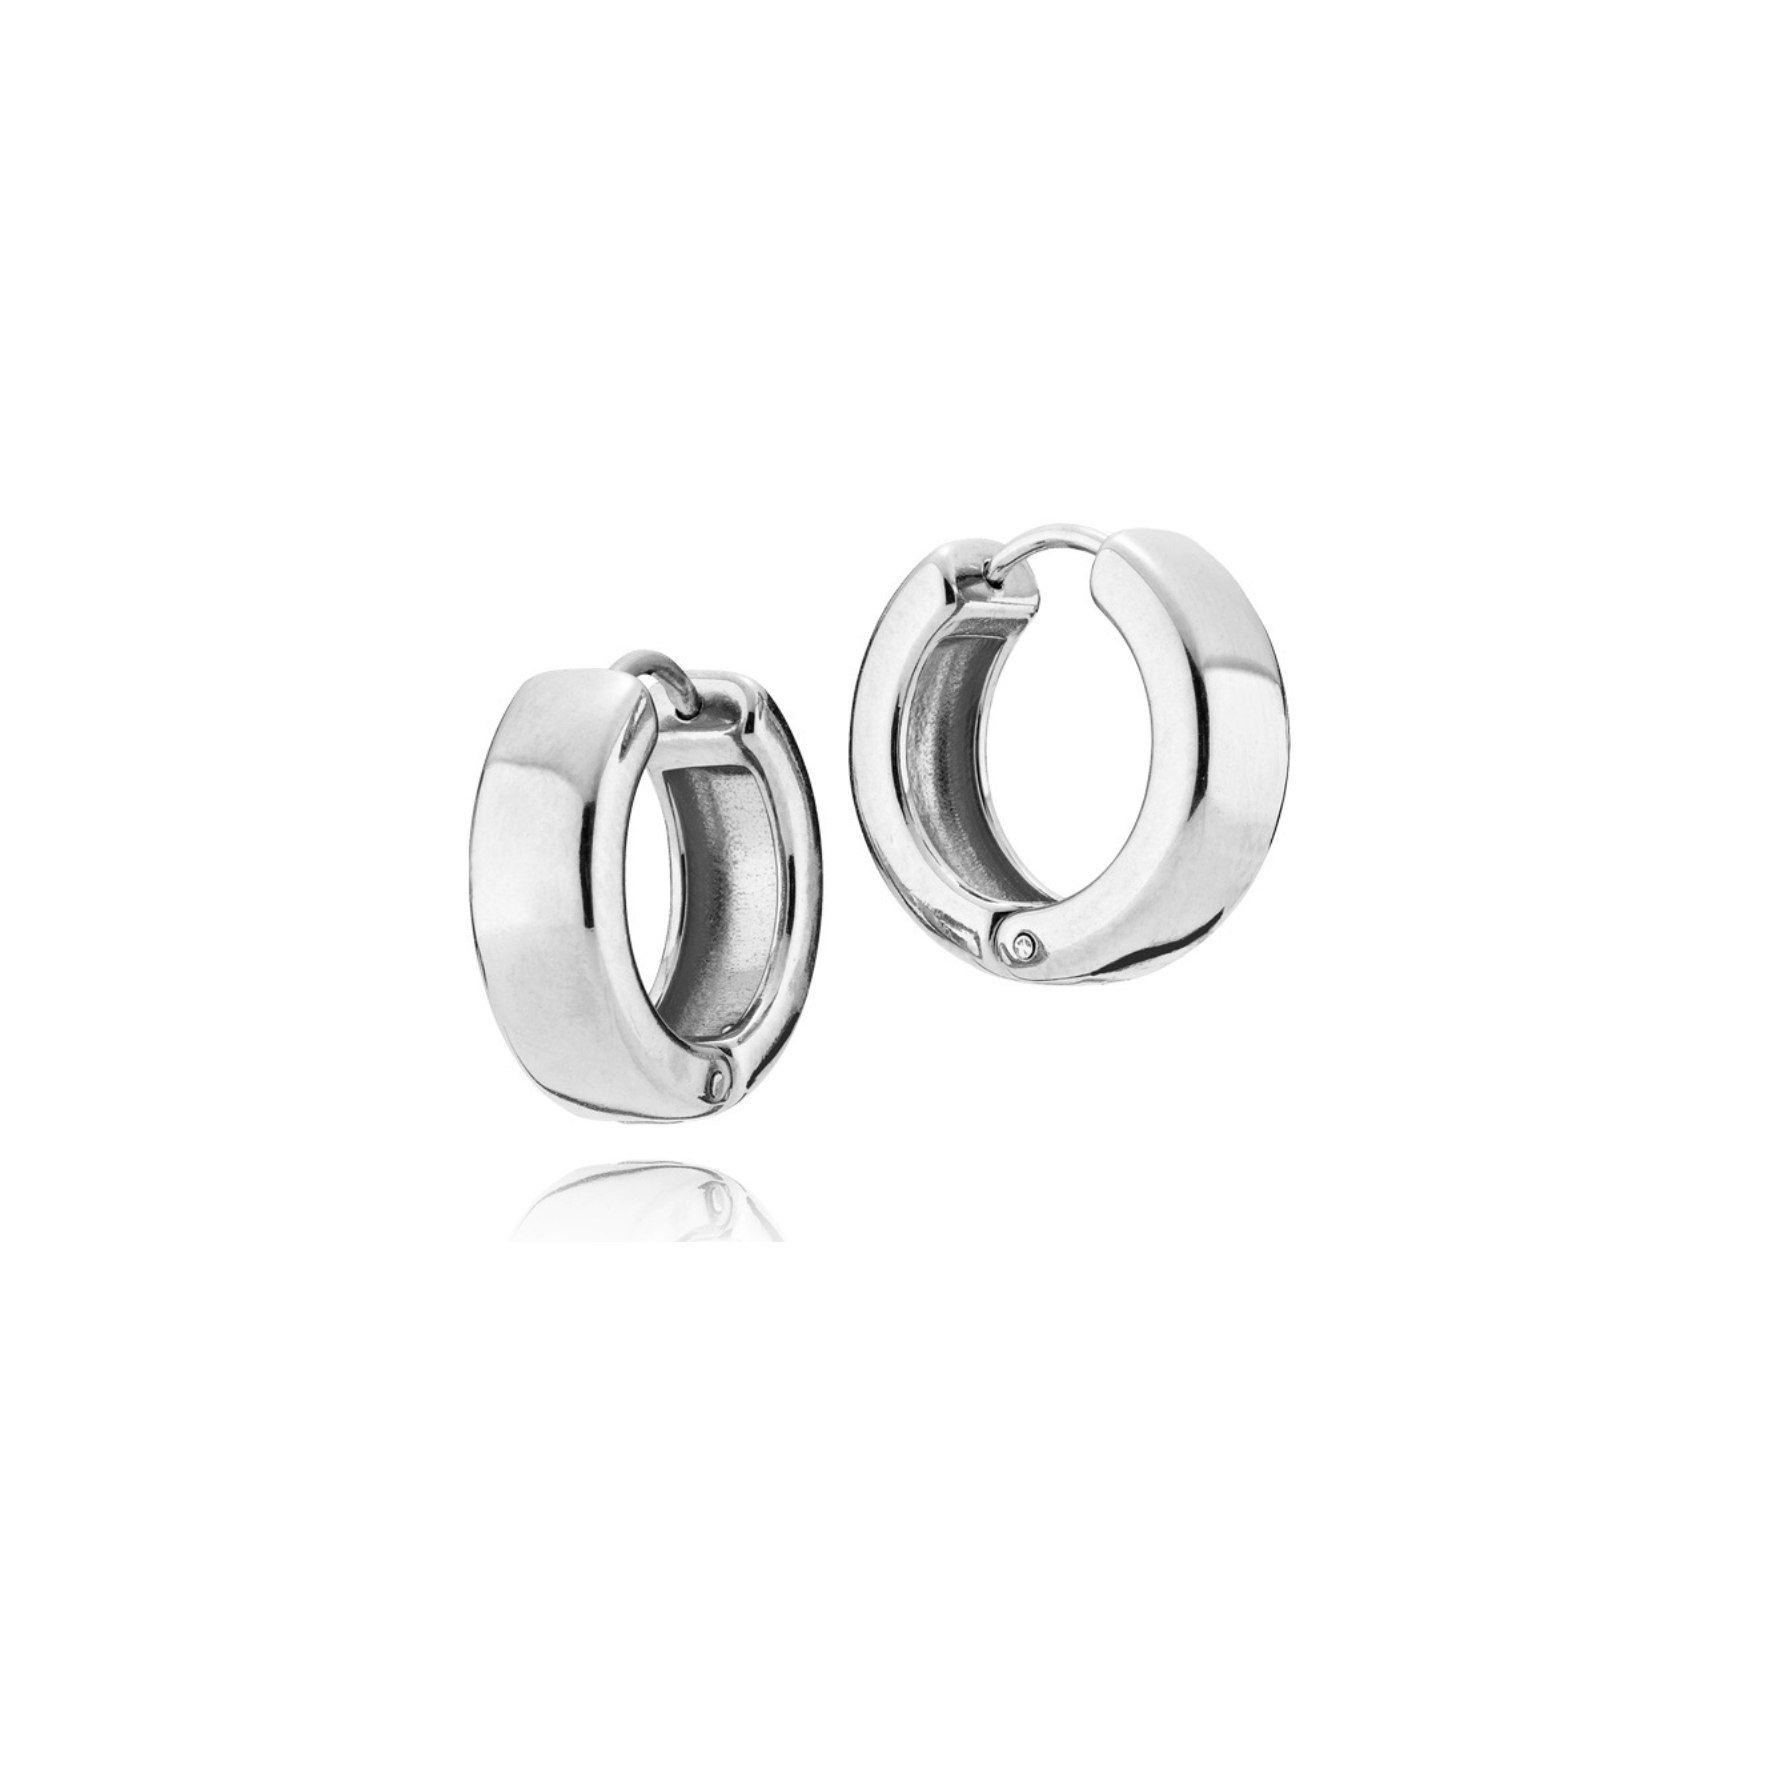 Maya Earrings from Sistie 2nd in Stainless steel